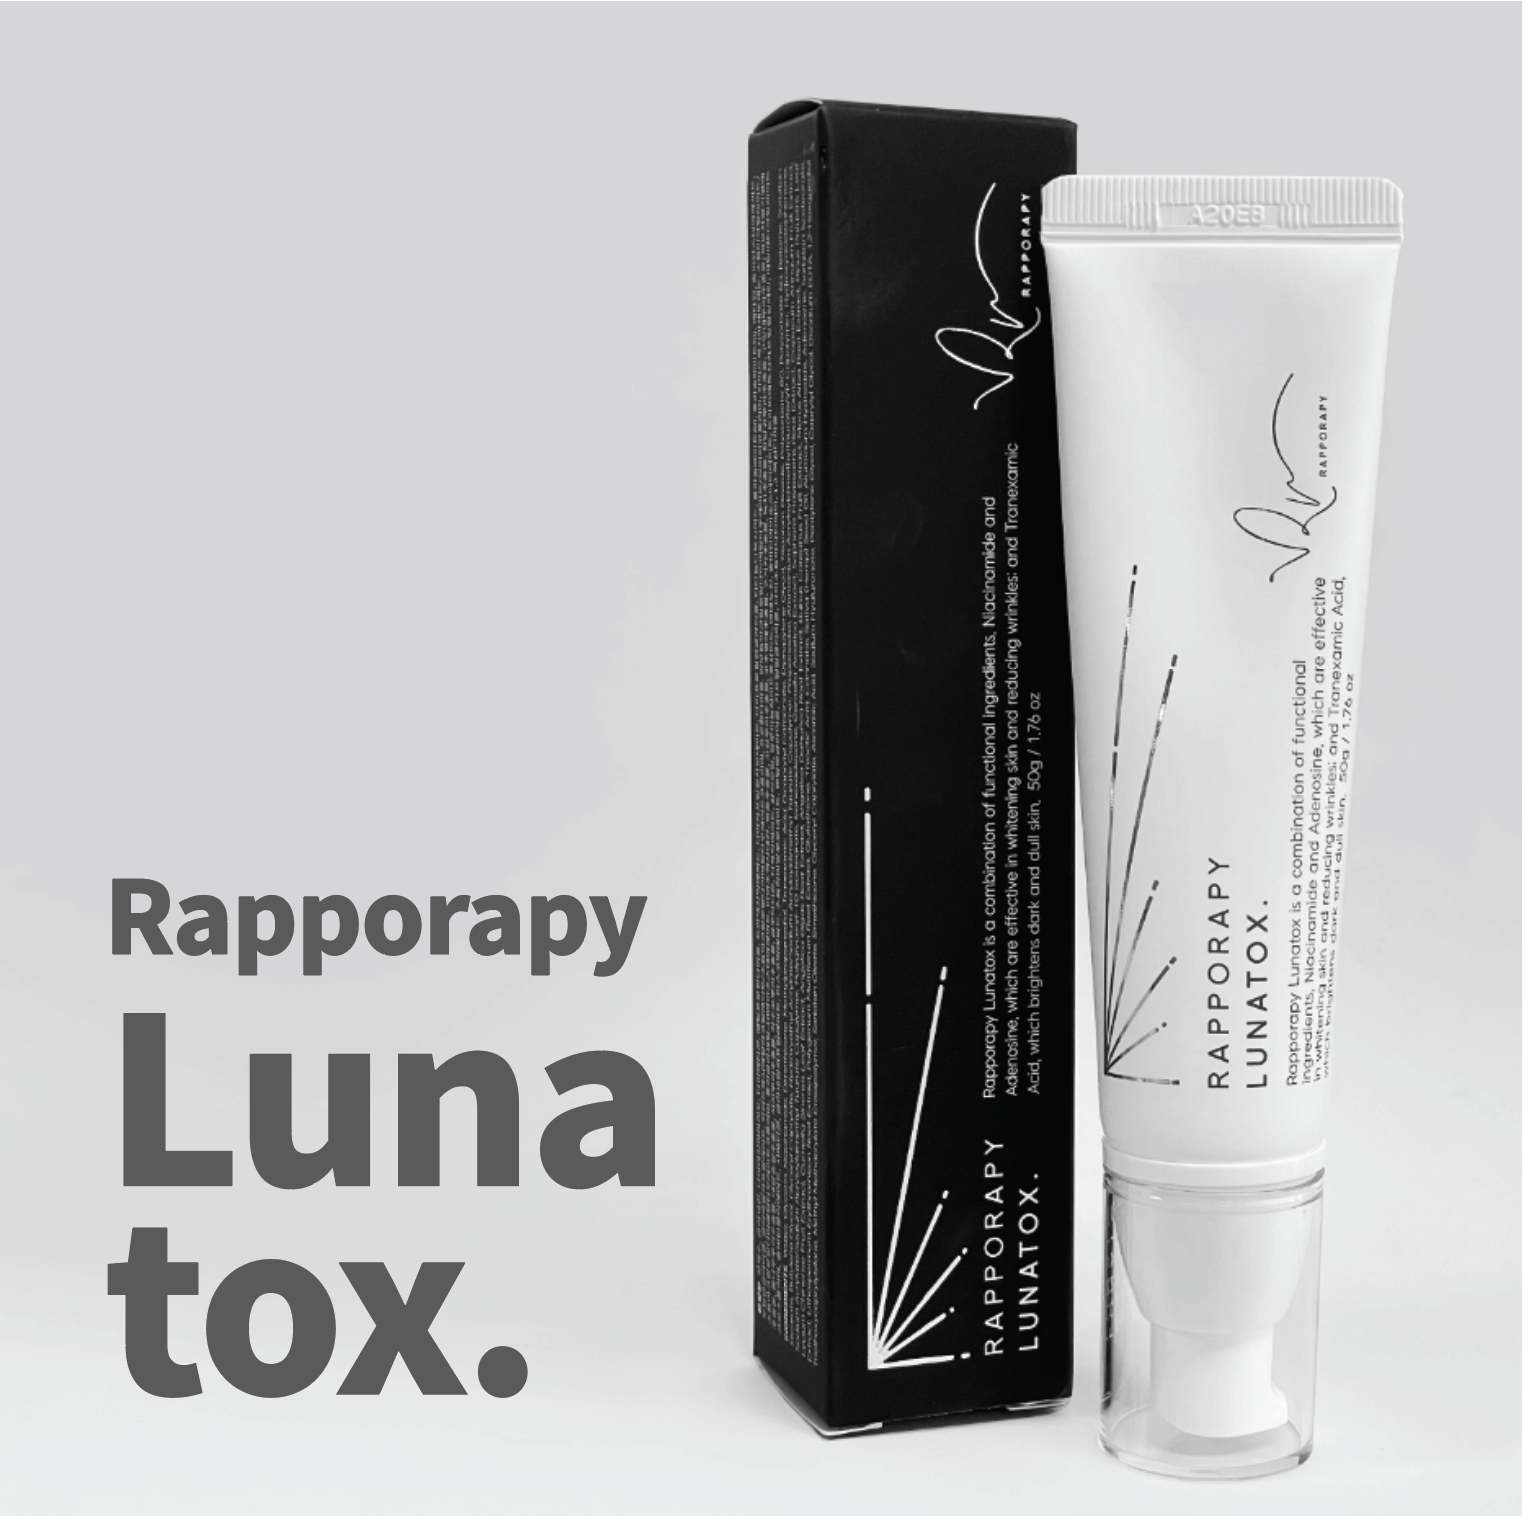 Rapporapy Lunatox Cream Skin Brightening  Skin Whitening Facial Cream Made in Korea